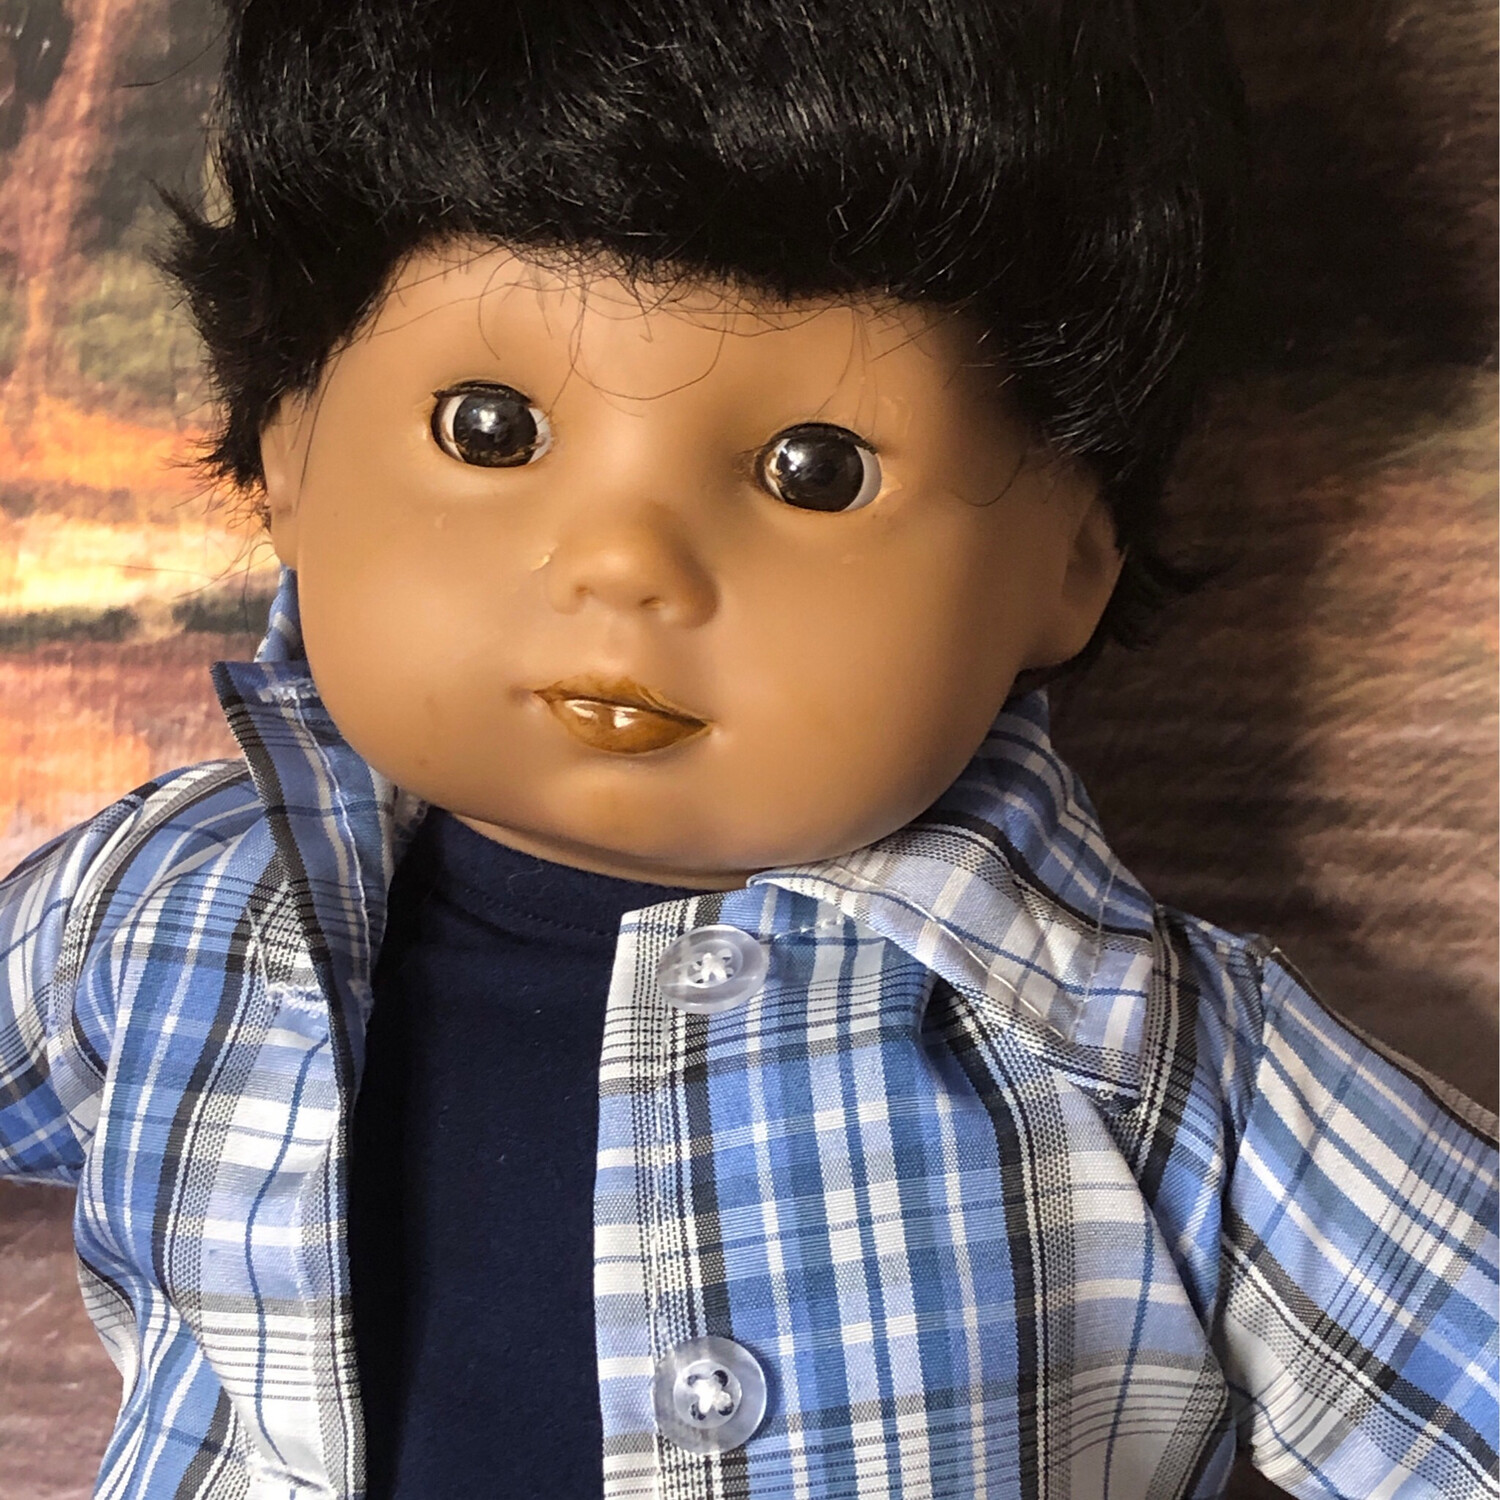 Carlos: OOAK Toddler Hispanic or Asian boy (AG Doll) 

